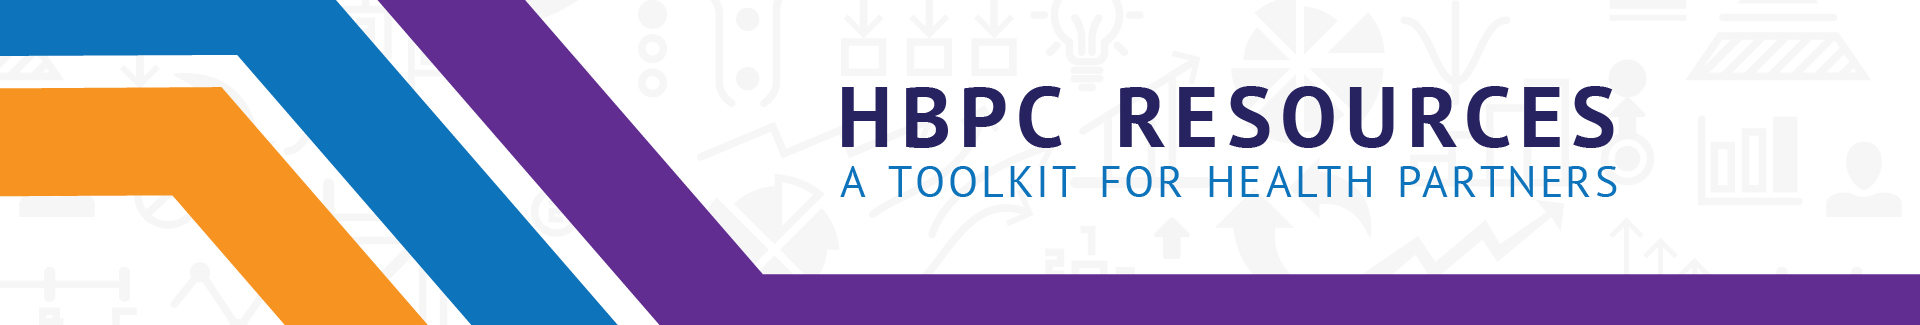 HBPC-header-image